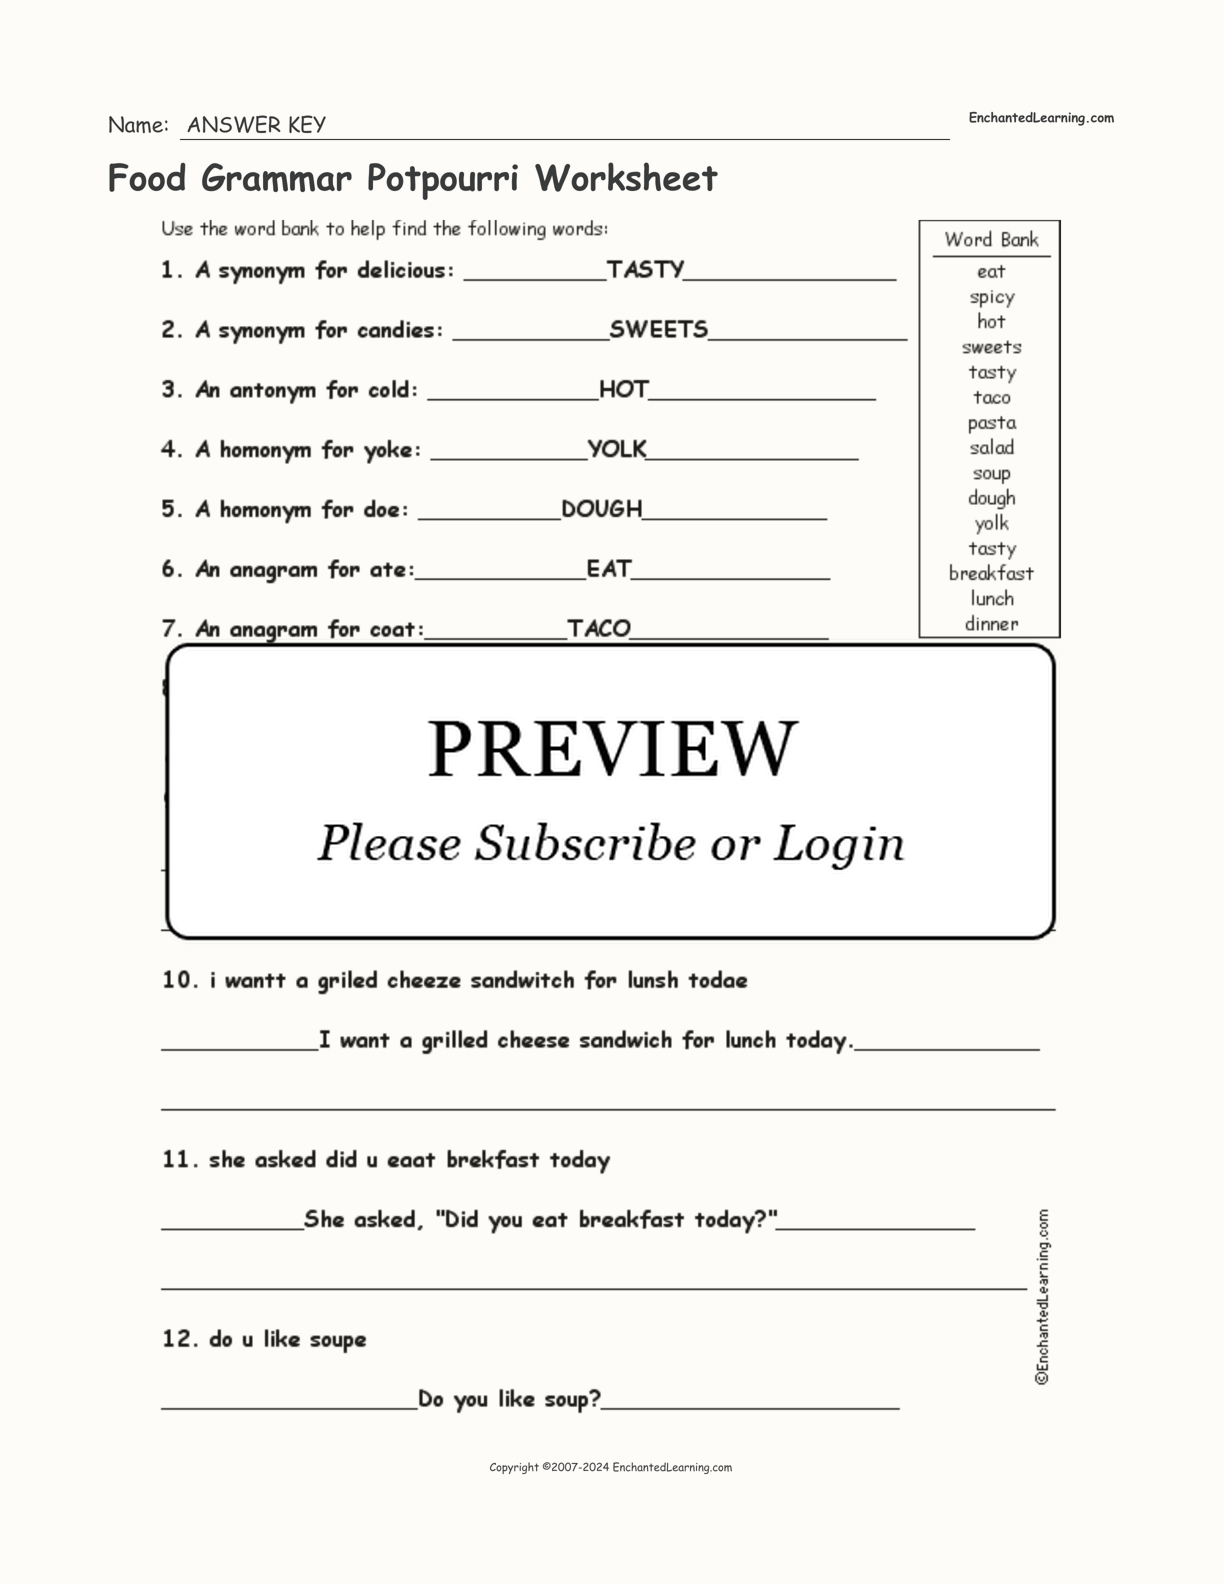 Food Grammar Potpourri Worksheet interactive worksheet page 2